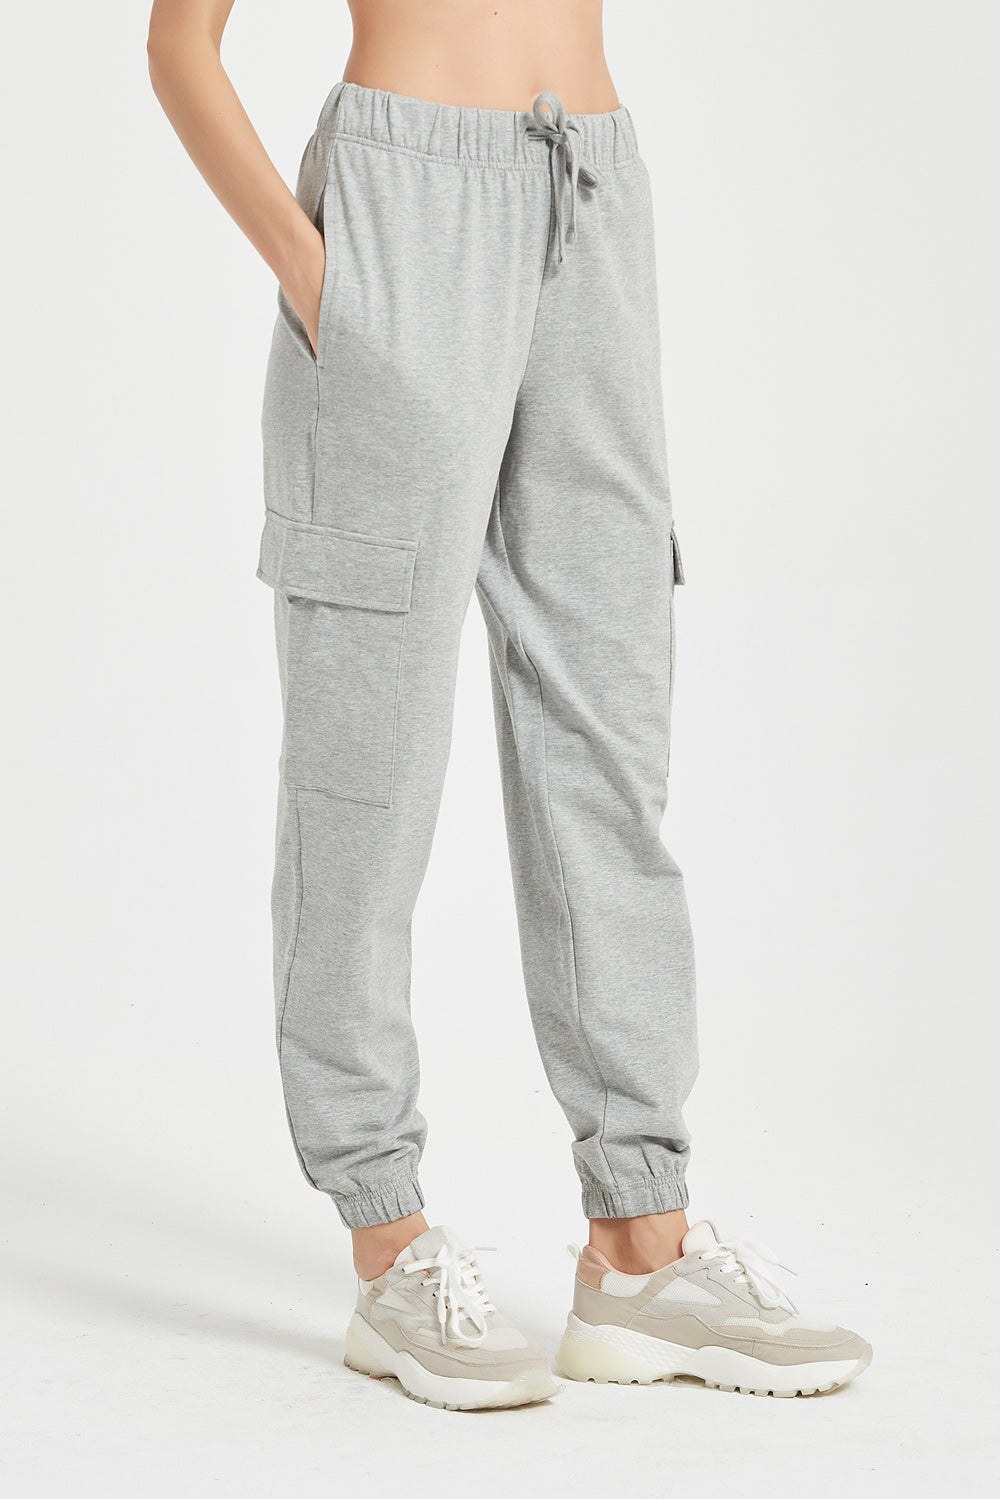 Gray Sweatpants Women, Sweat Gray Pants Women